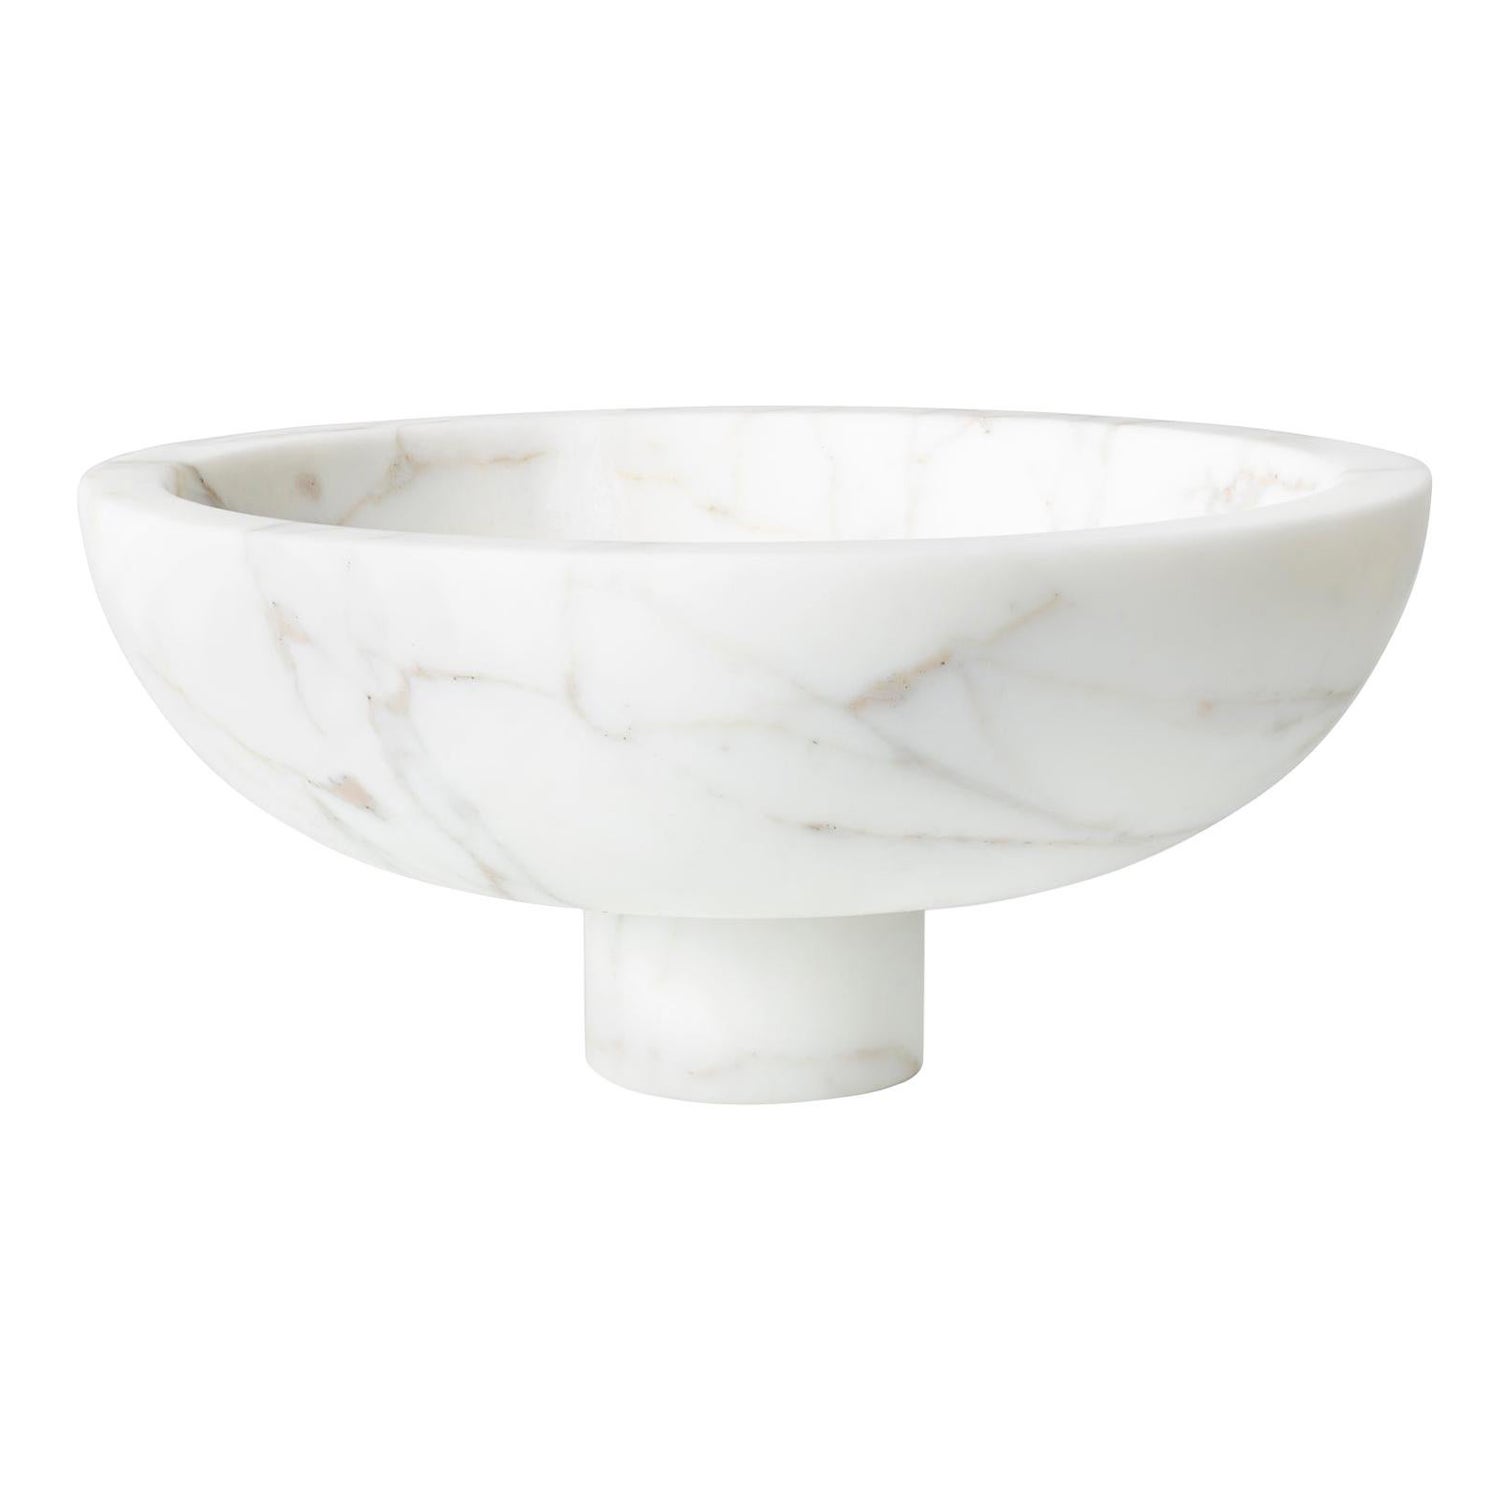 Fruit Bowl in White Marble, by Karen Chekerdjian, Made in Italy_Stock